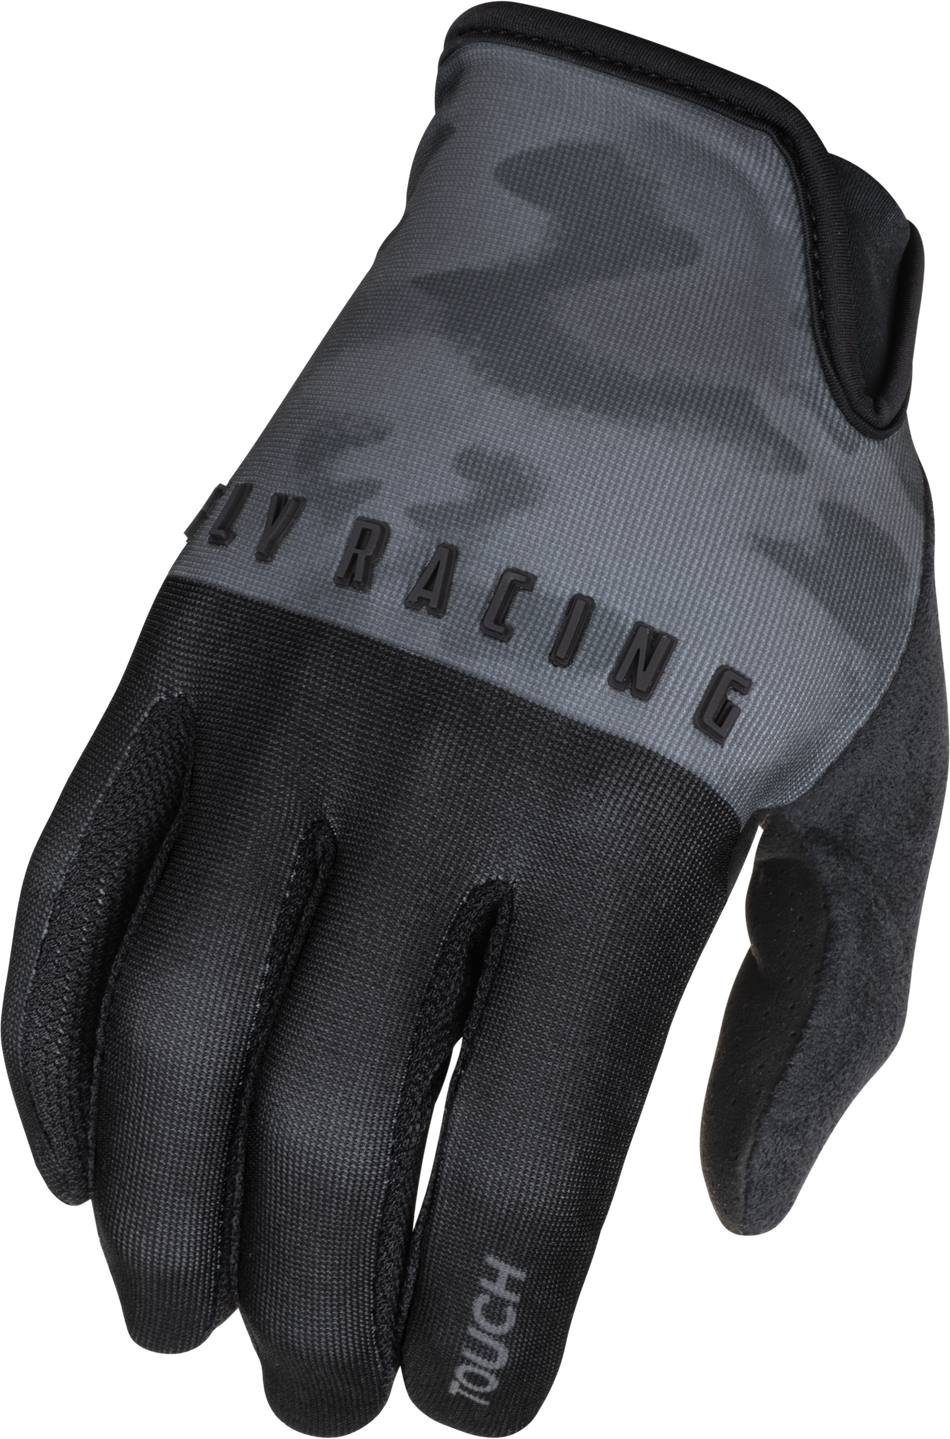 FLY RACING Media Gloves Black/Grey Camo Sm 350-0121S